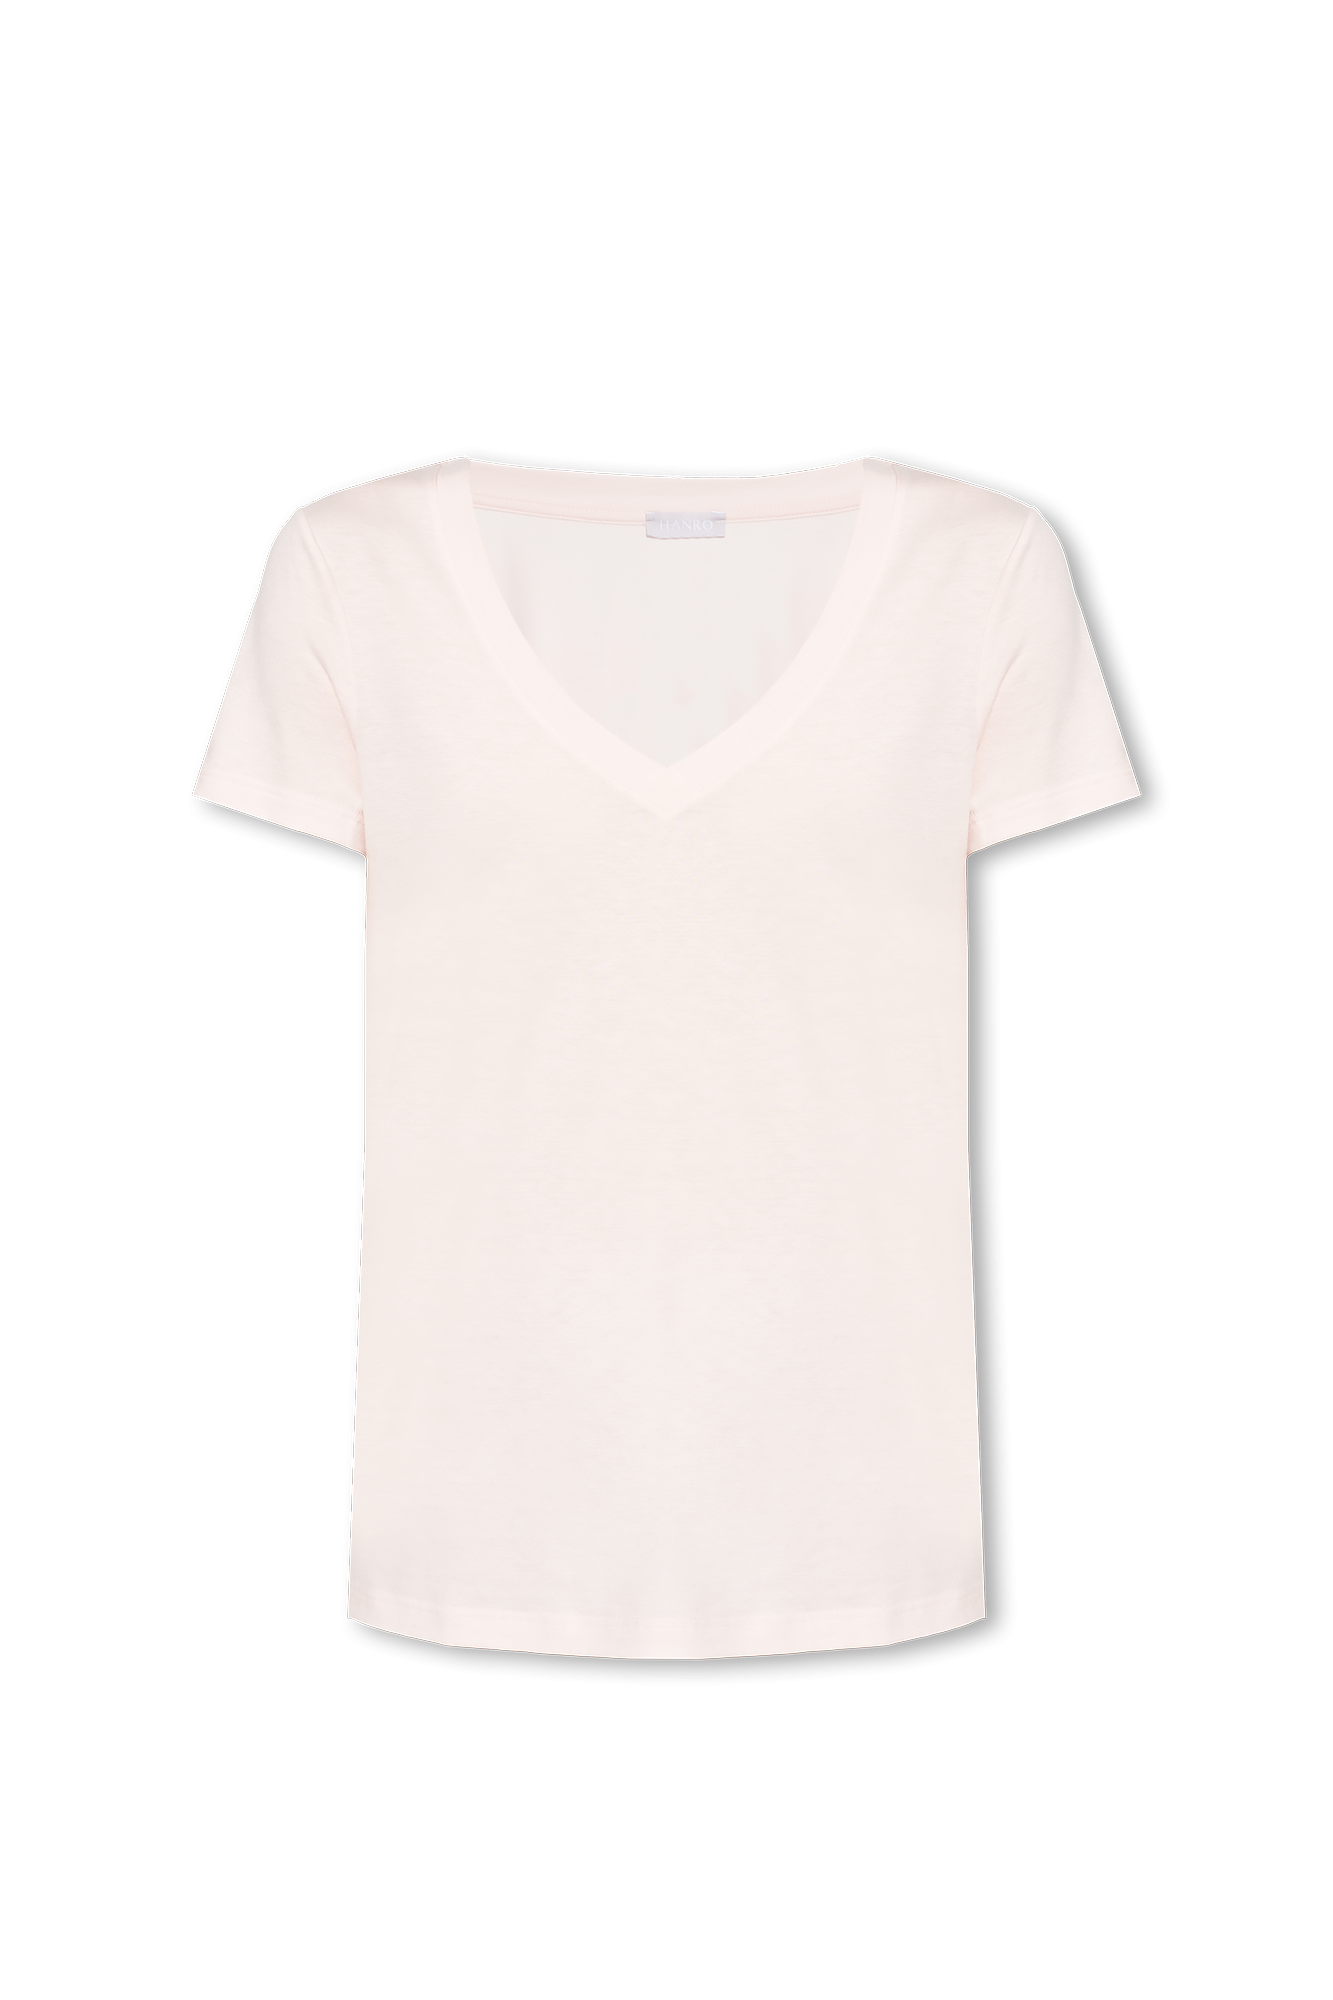 Pink 'Sleep & Lounge' underwear top Hanro - T-shirt ASICS Future